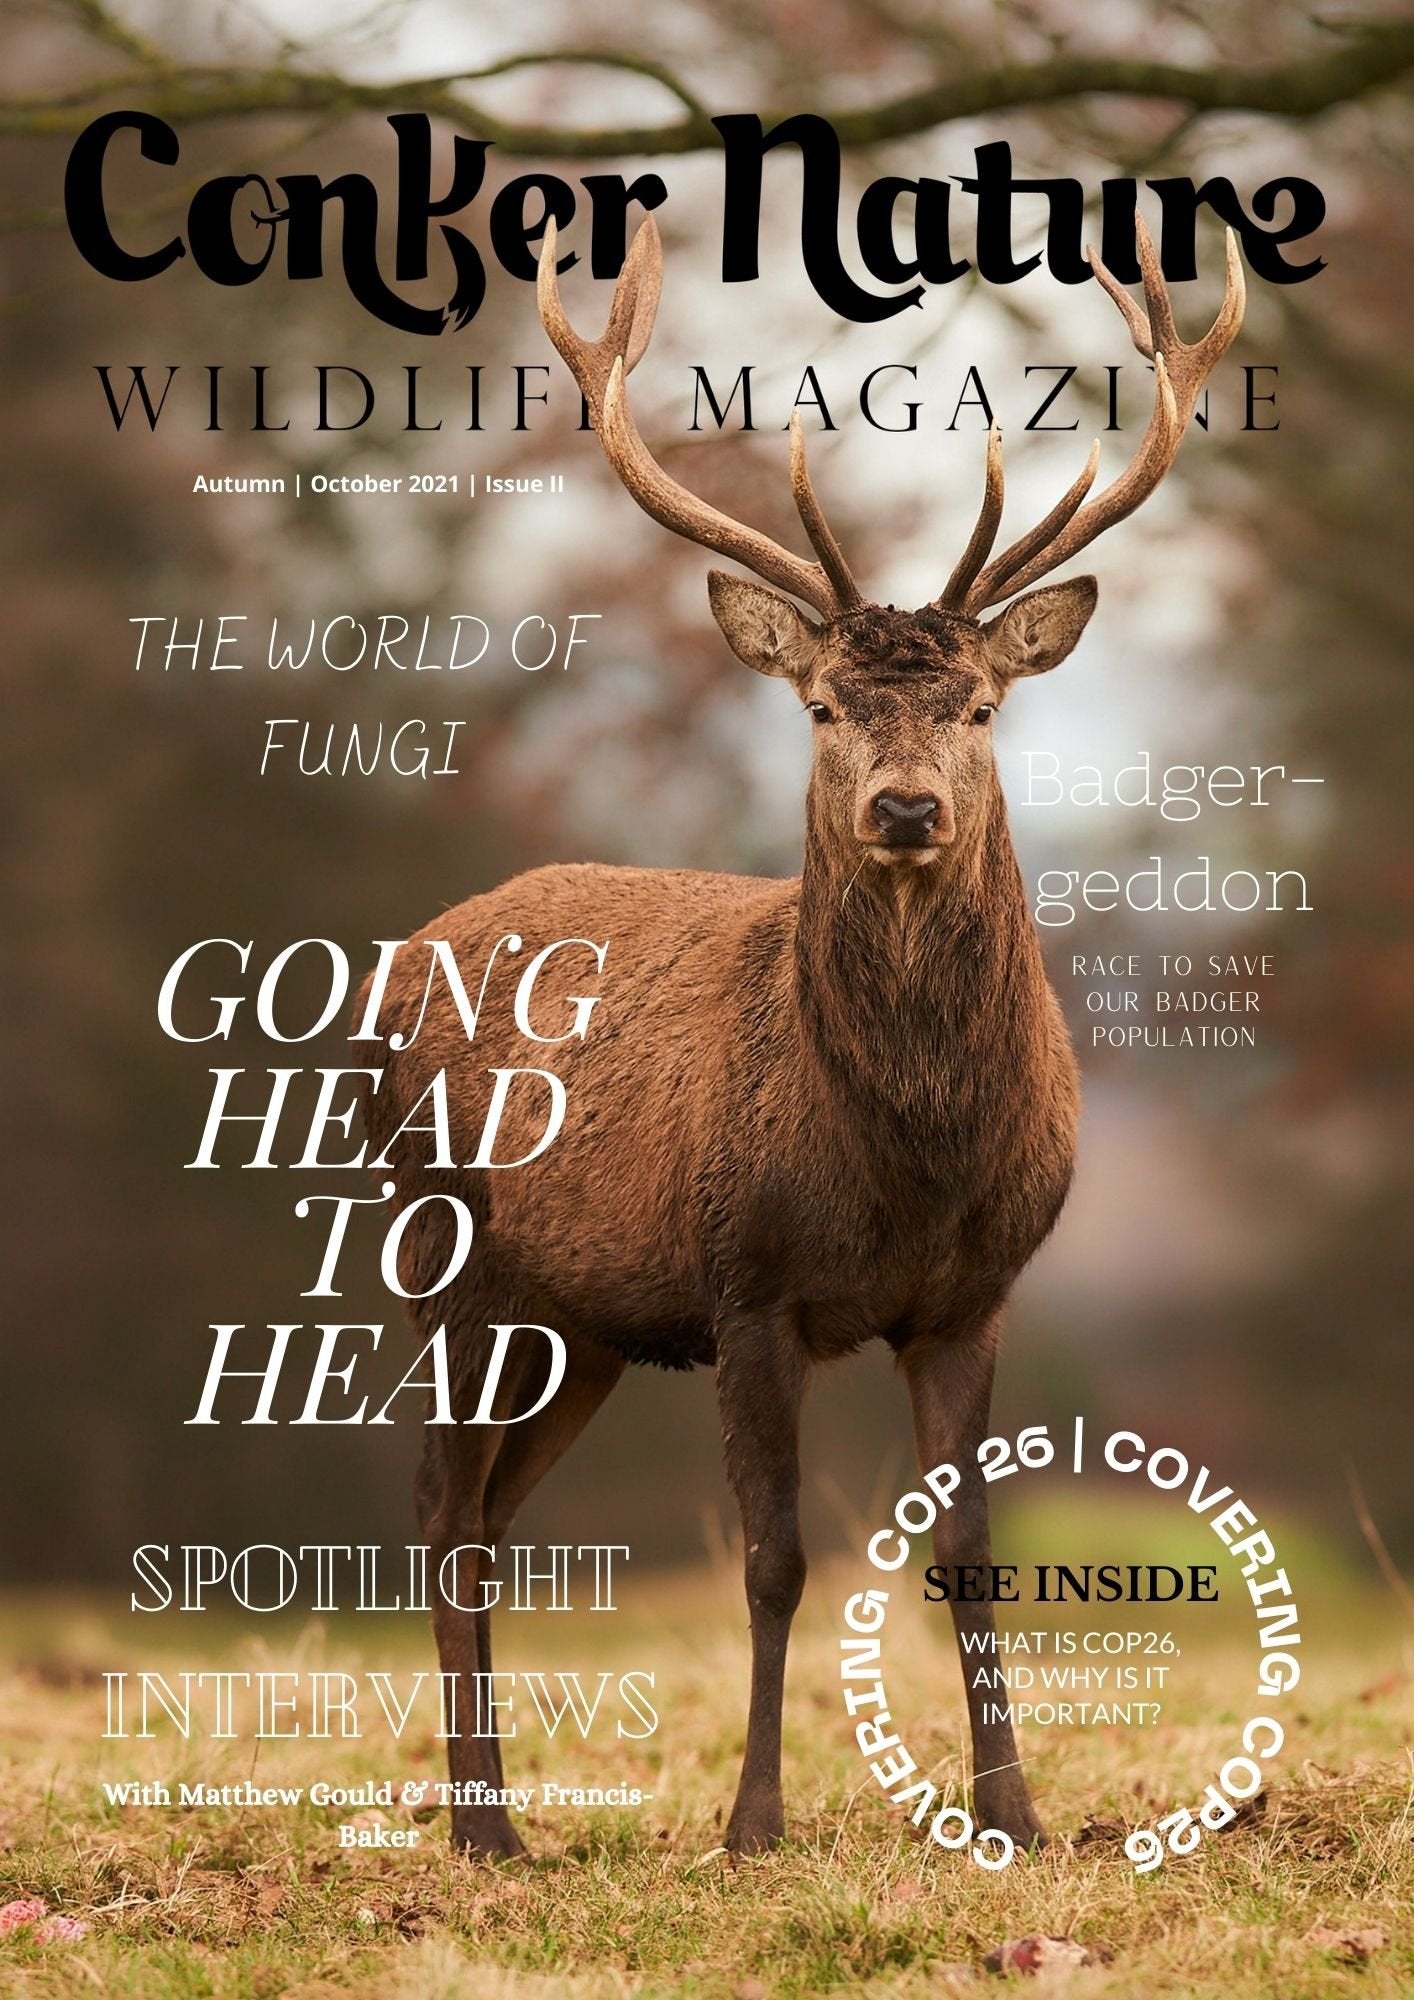 Conker Nature Wildlife Magazine: Autumn | October 2021 | Volume II, Issue I - PRINT & DIGITAL